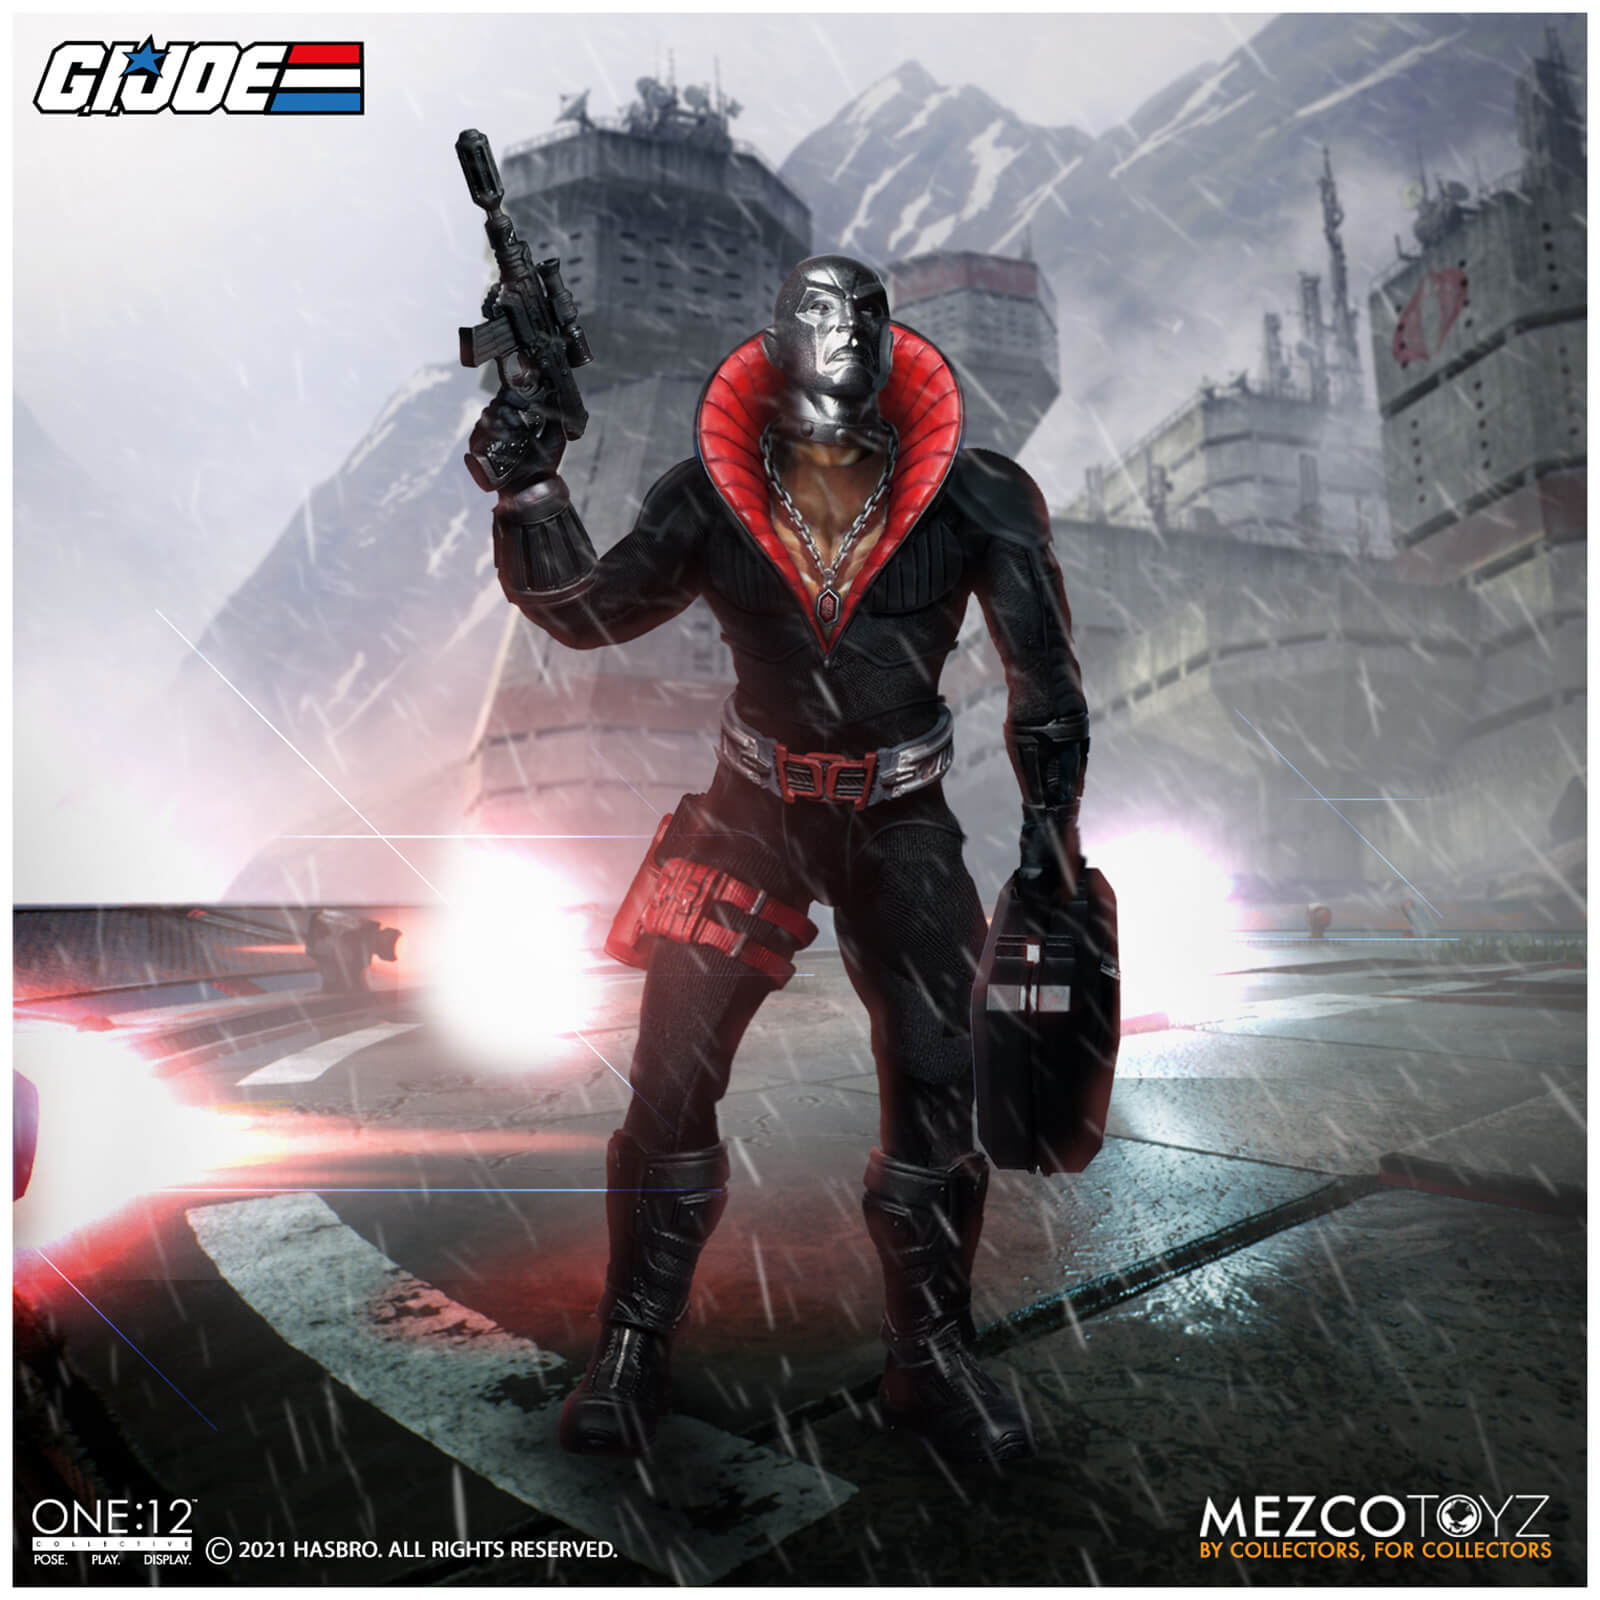 Mezco One: 12 Collective G.I. Joe Destro Figure